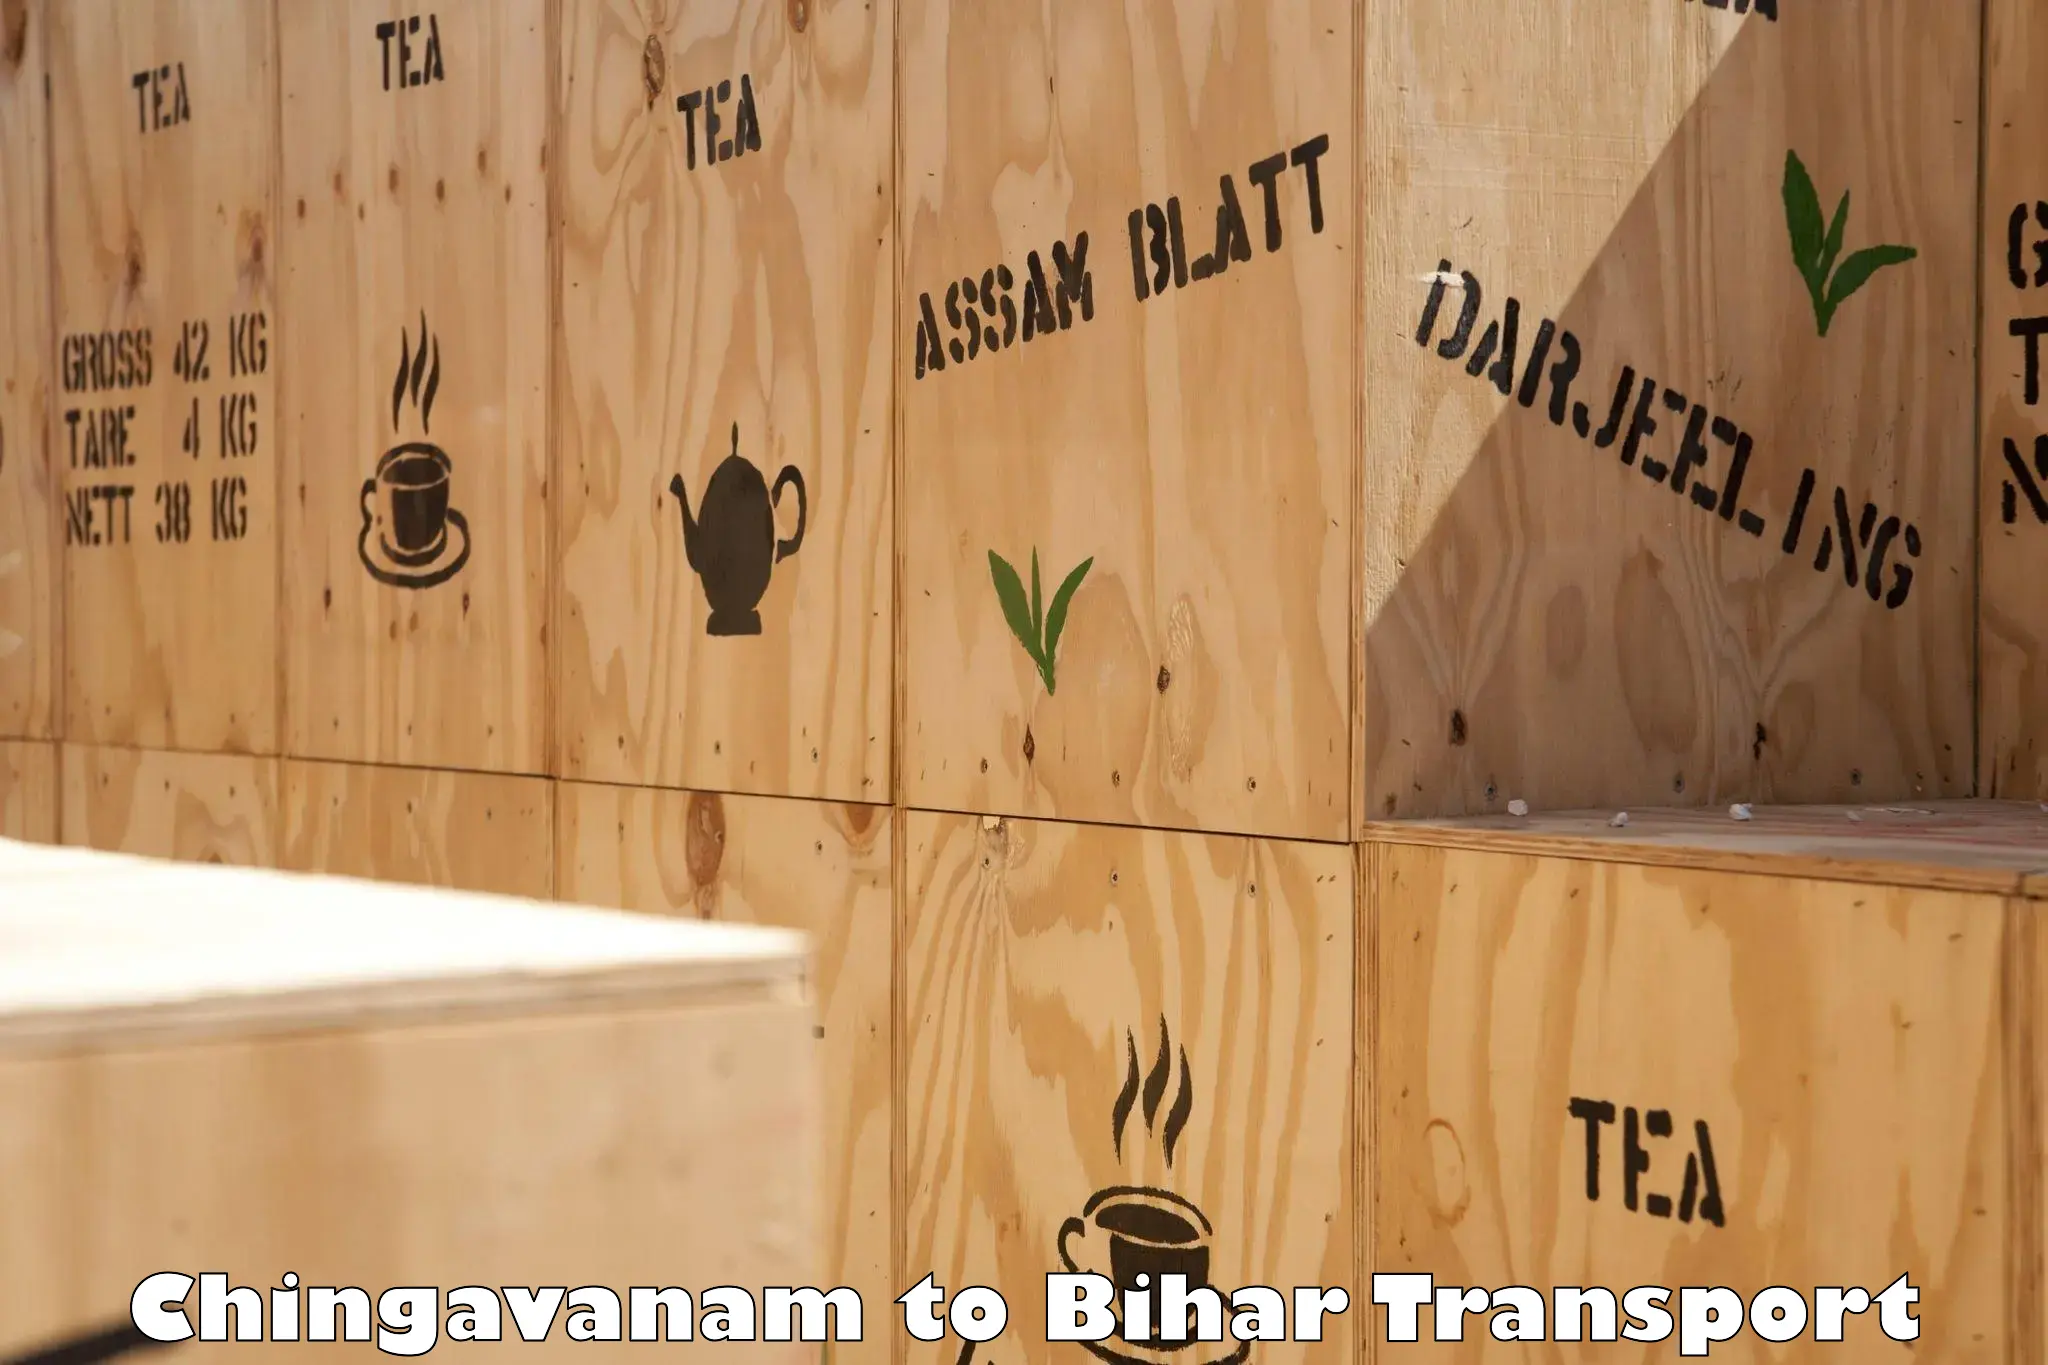 Truck transport companies in India Chingavanam to Bagaha